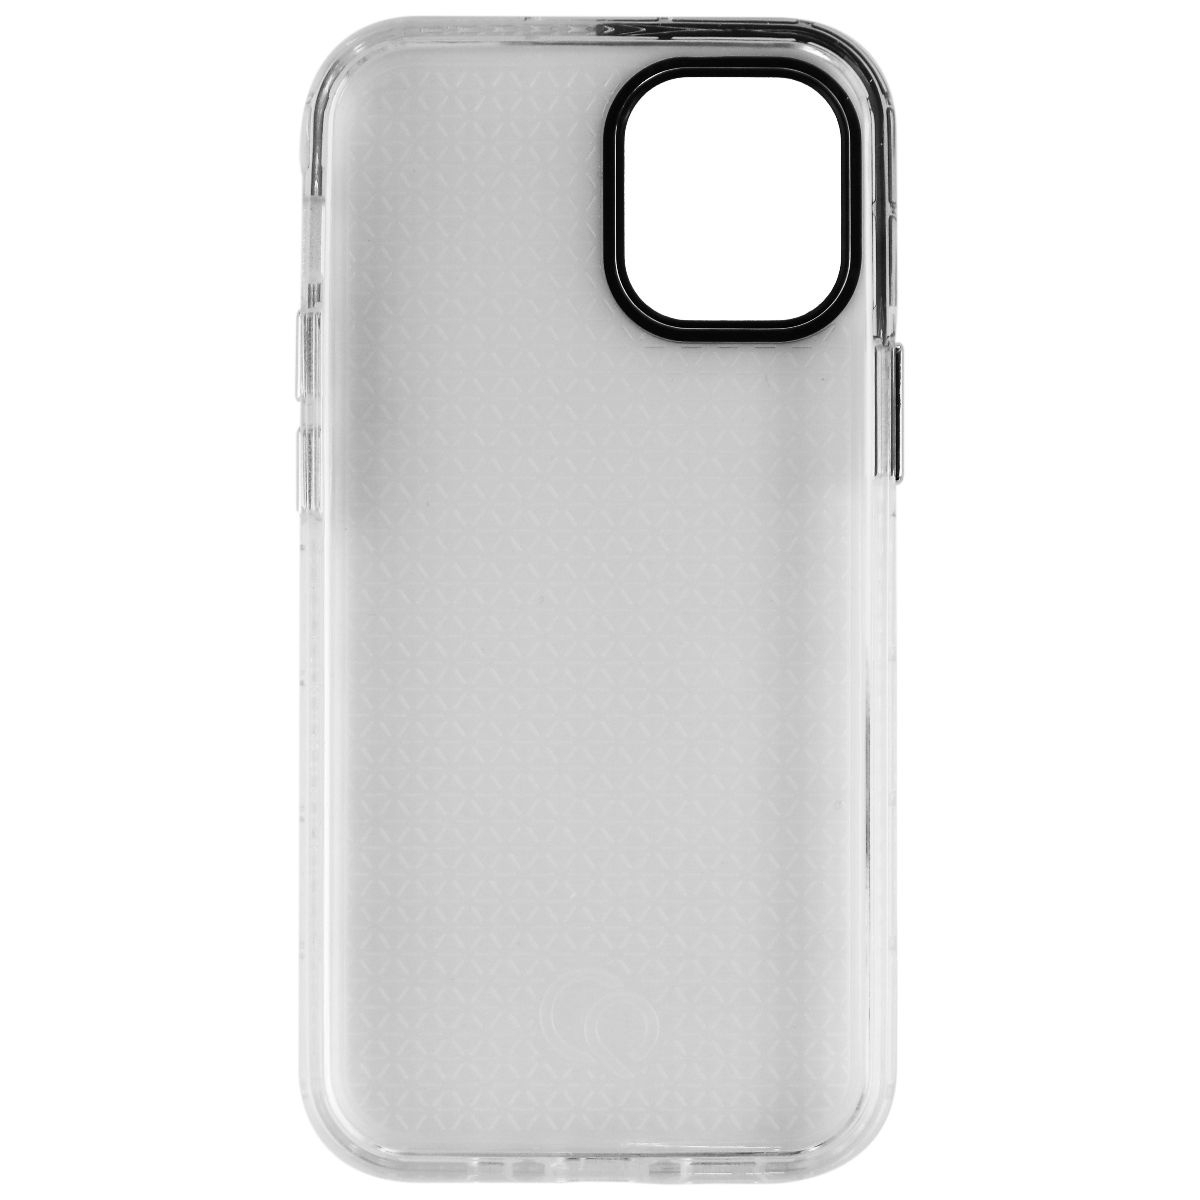 Nimbus9 Phantom 2 Series Flexible Gel Case For IPhone 12 Mini - Clear